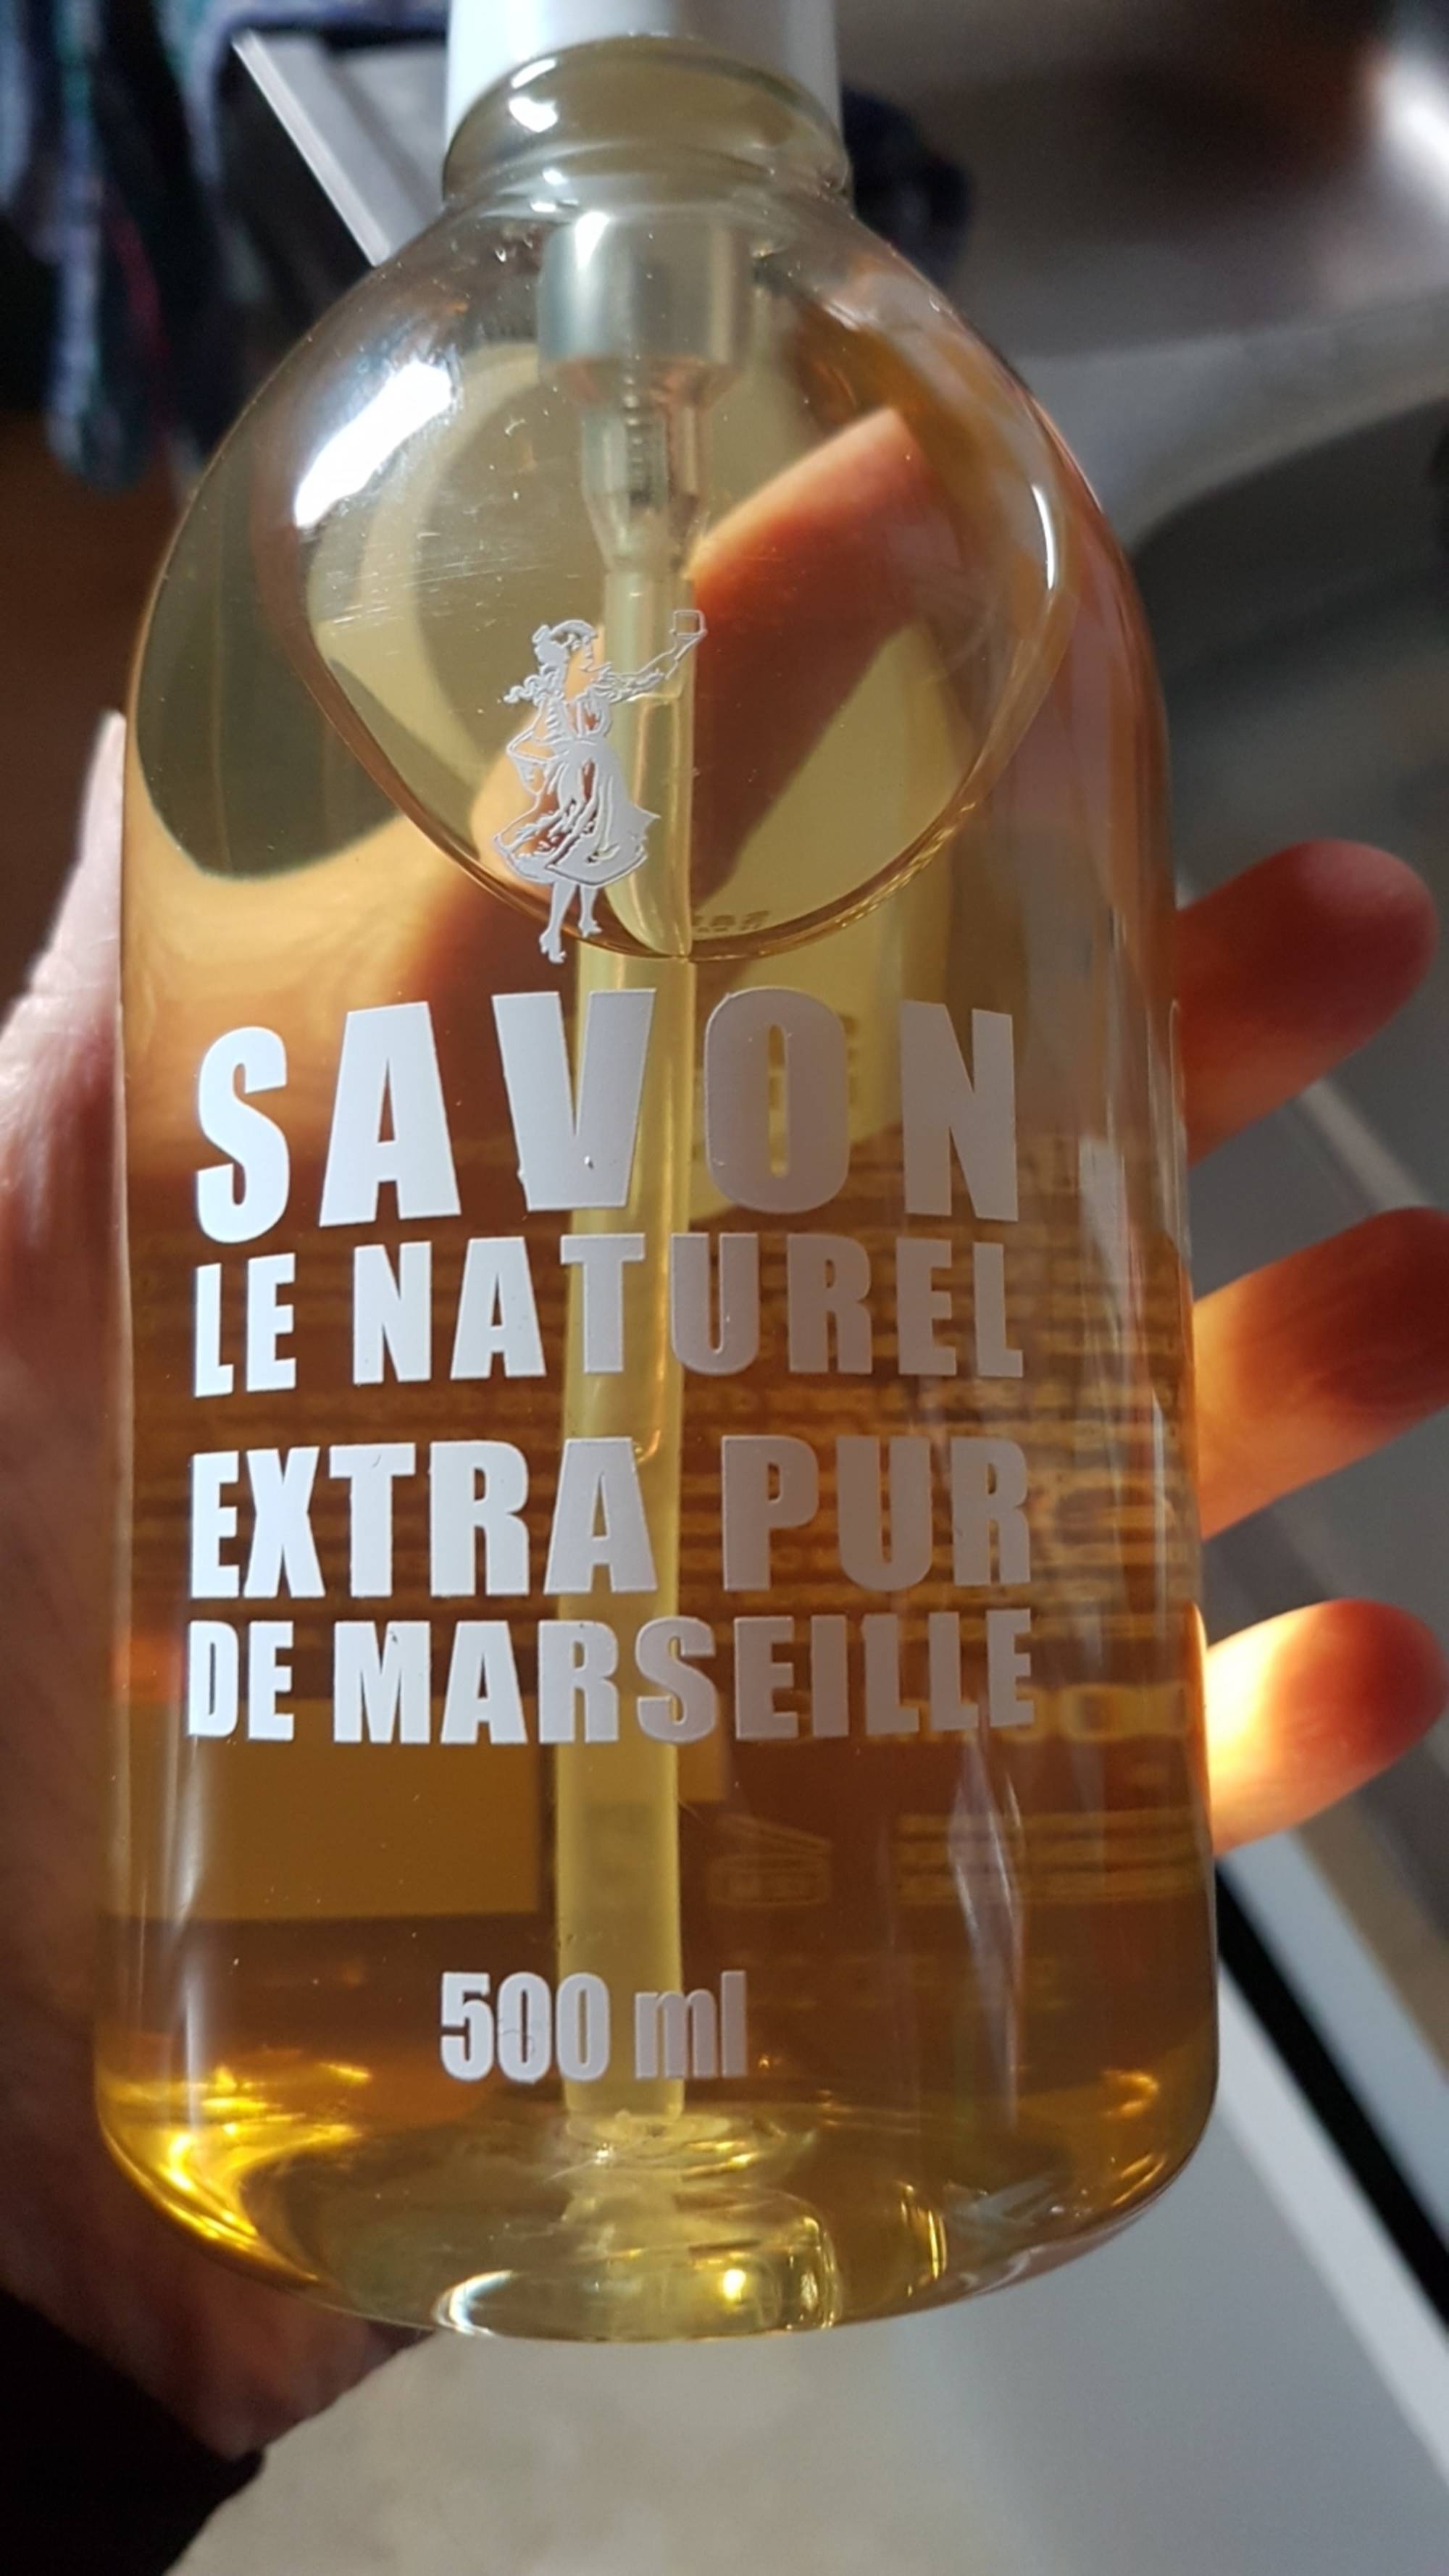 SAVON LE NATUREL - Extra pur de Marseille